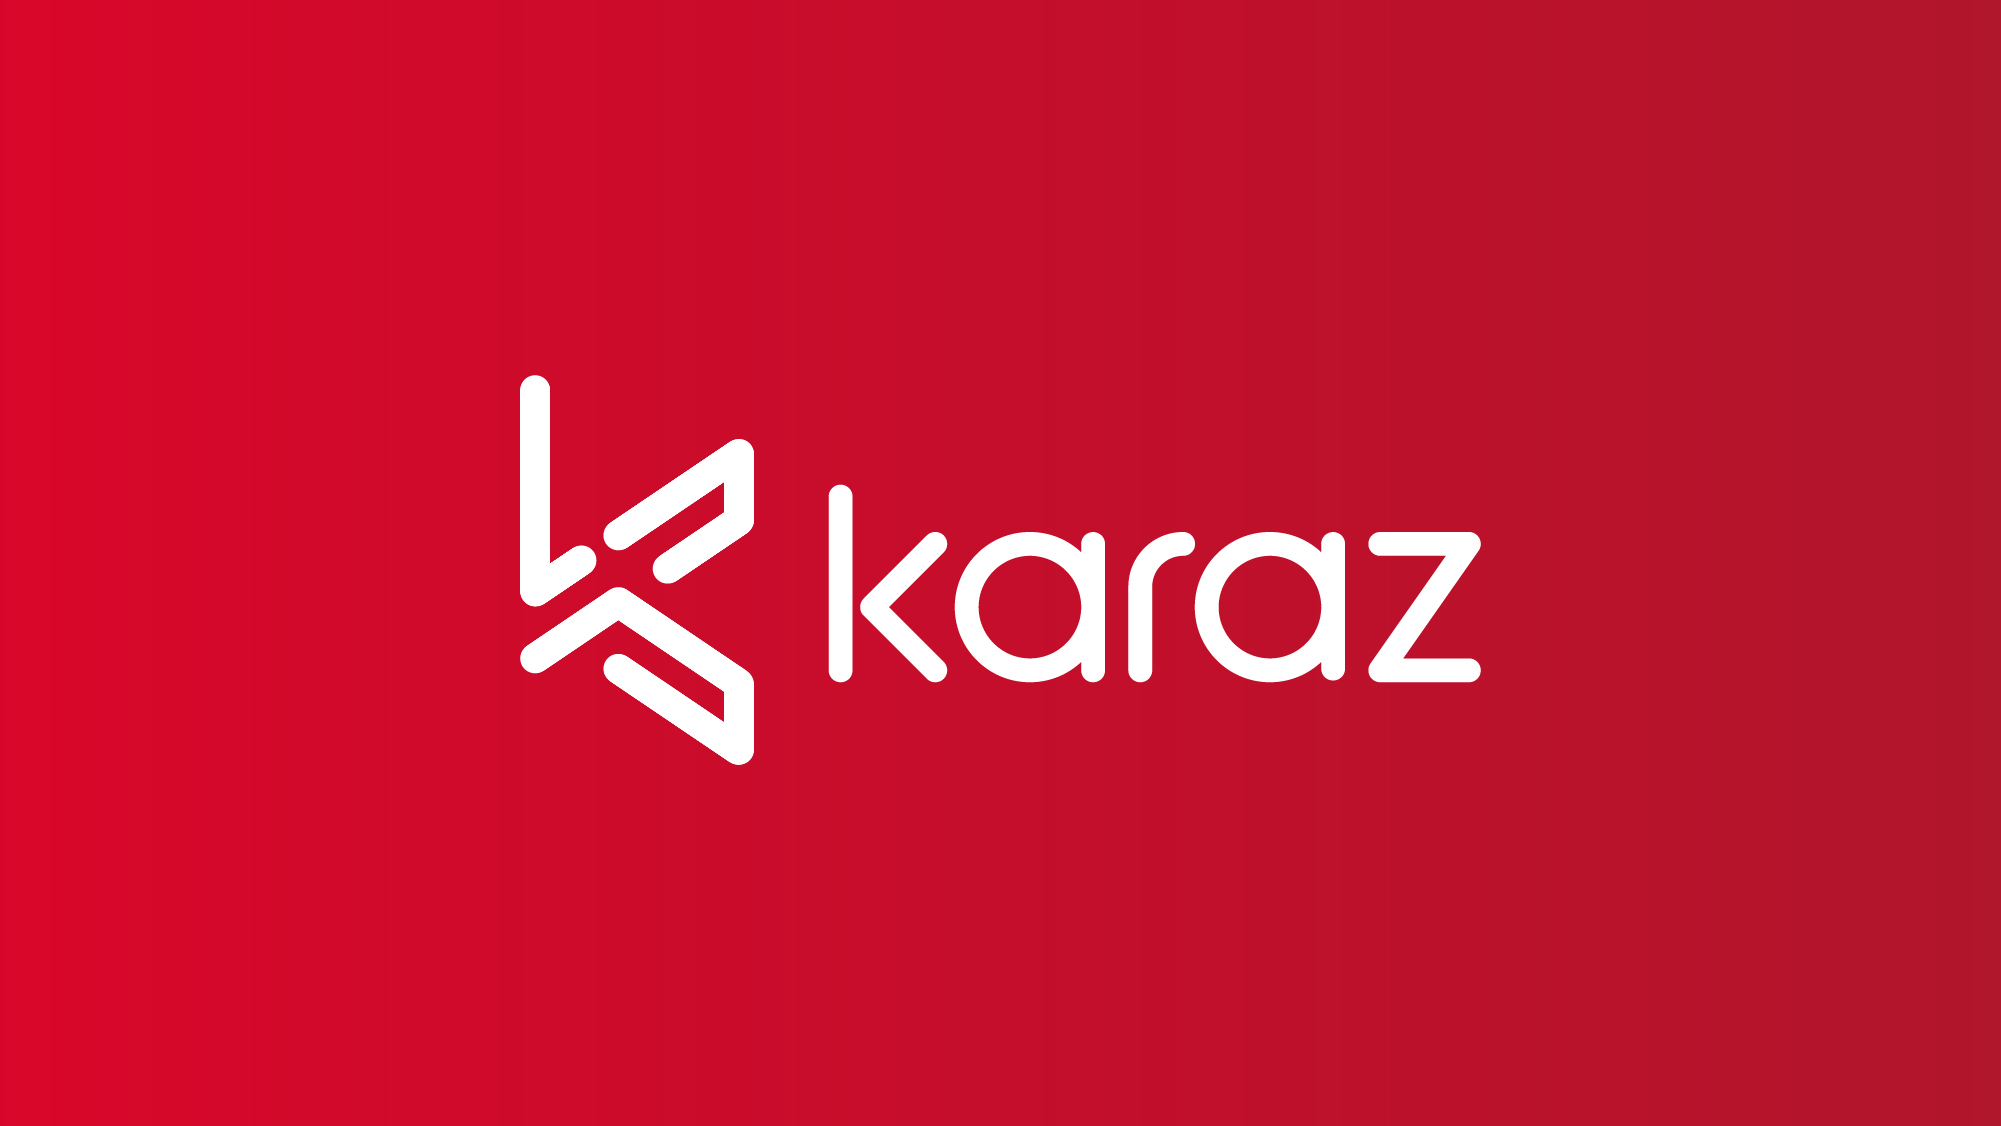 Karaz-Branding-By-Millimeter-Creative-Agency-12